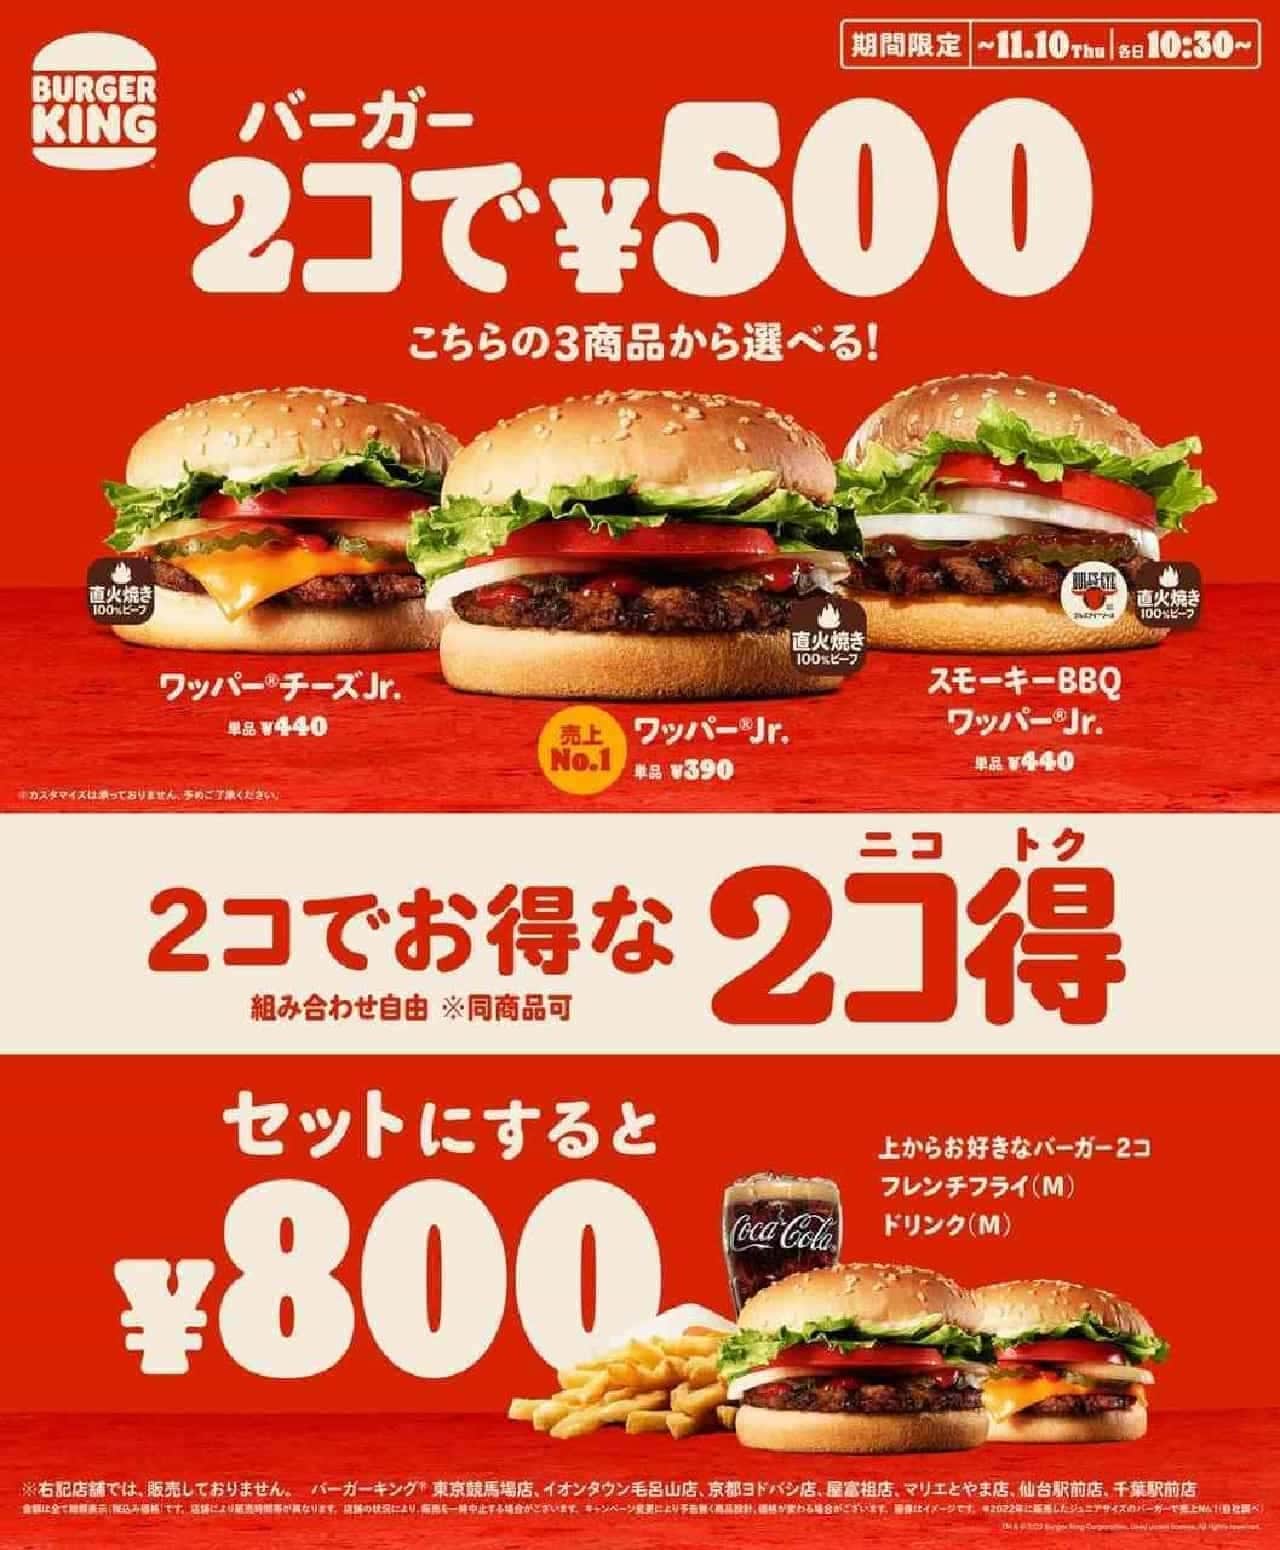 Burger King "2koku (Nikotoku)